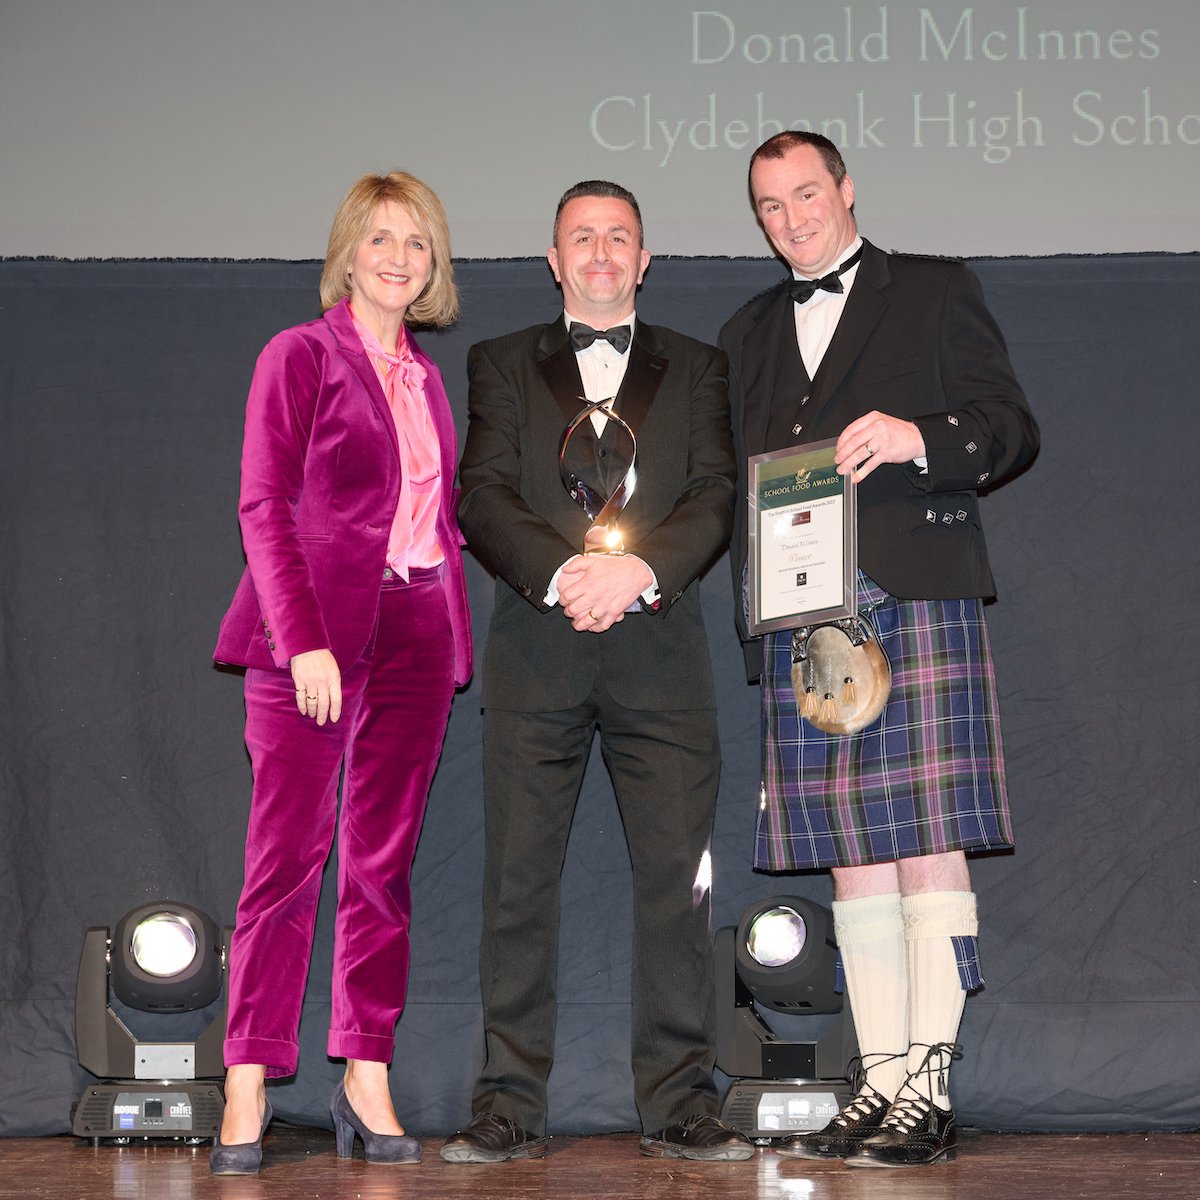 Donald McInnes winning scottish school chef of the year